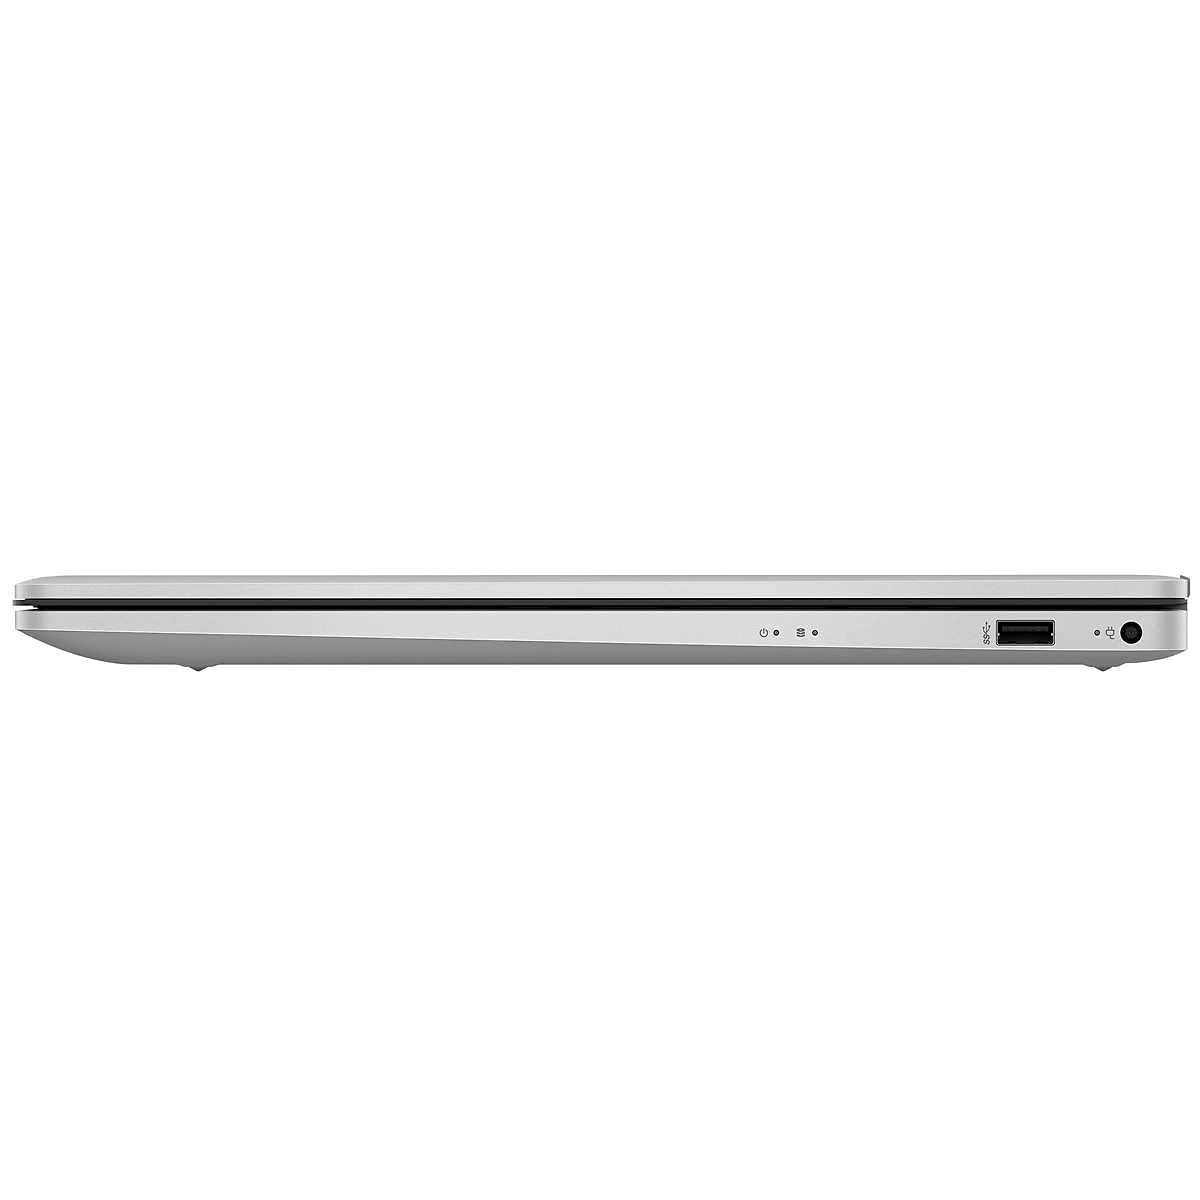 HP High Performance Business Laptop 2022, 17.3